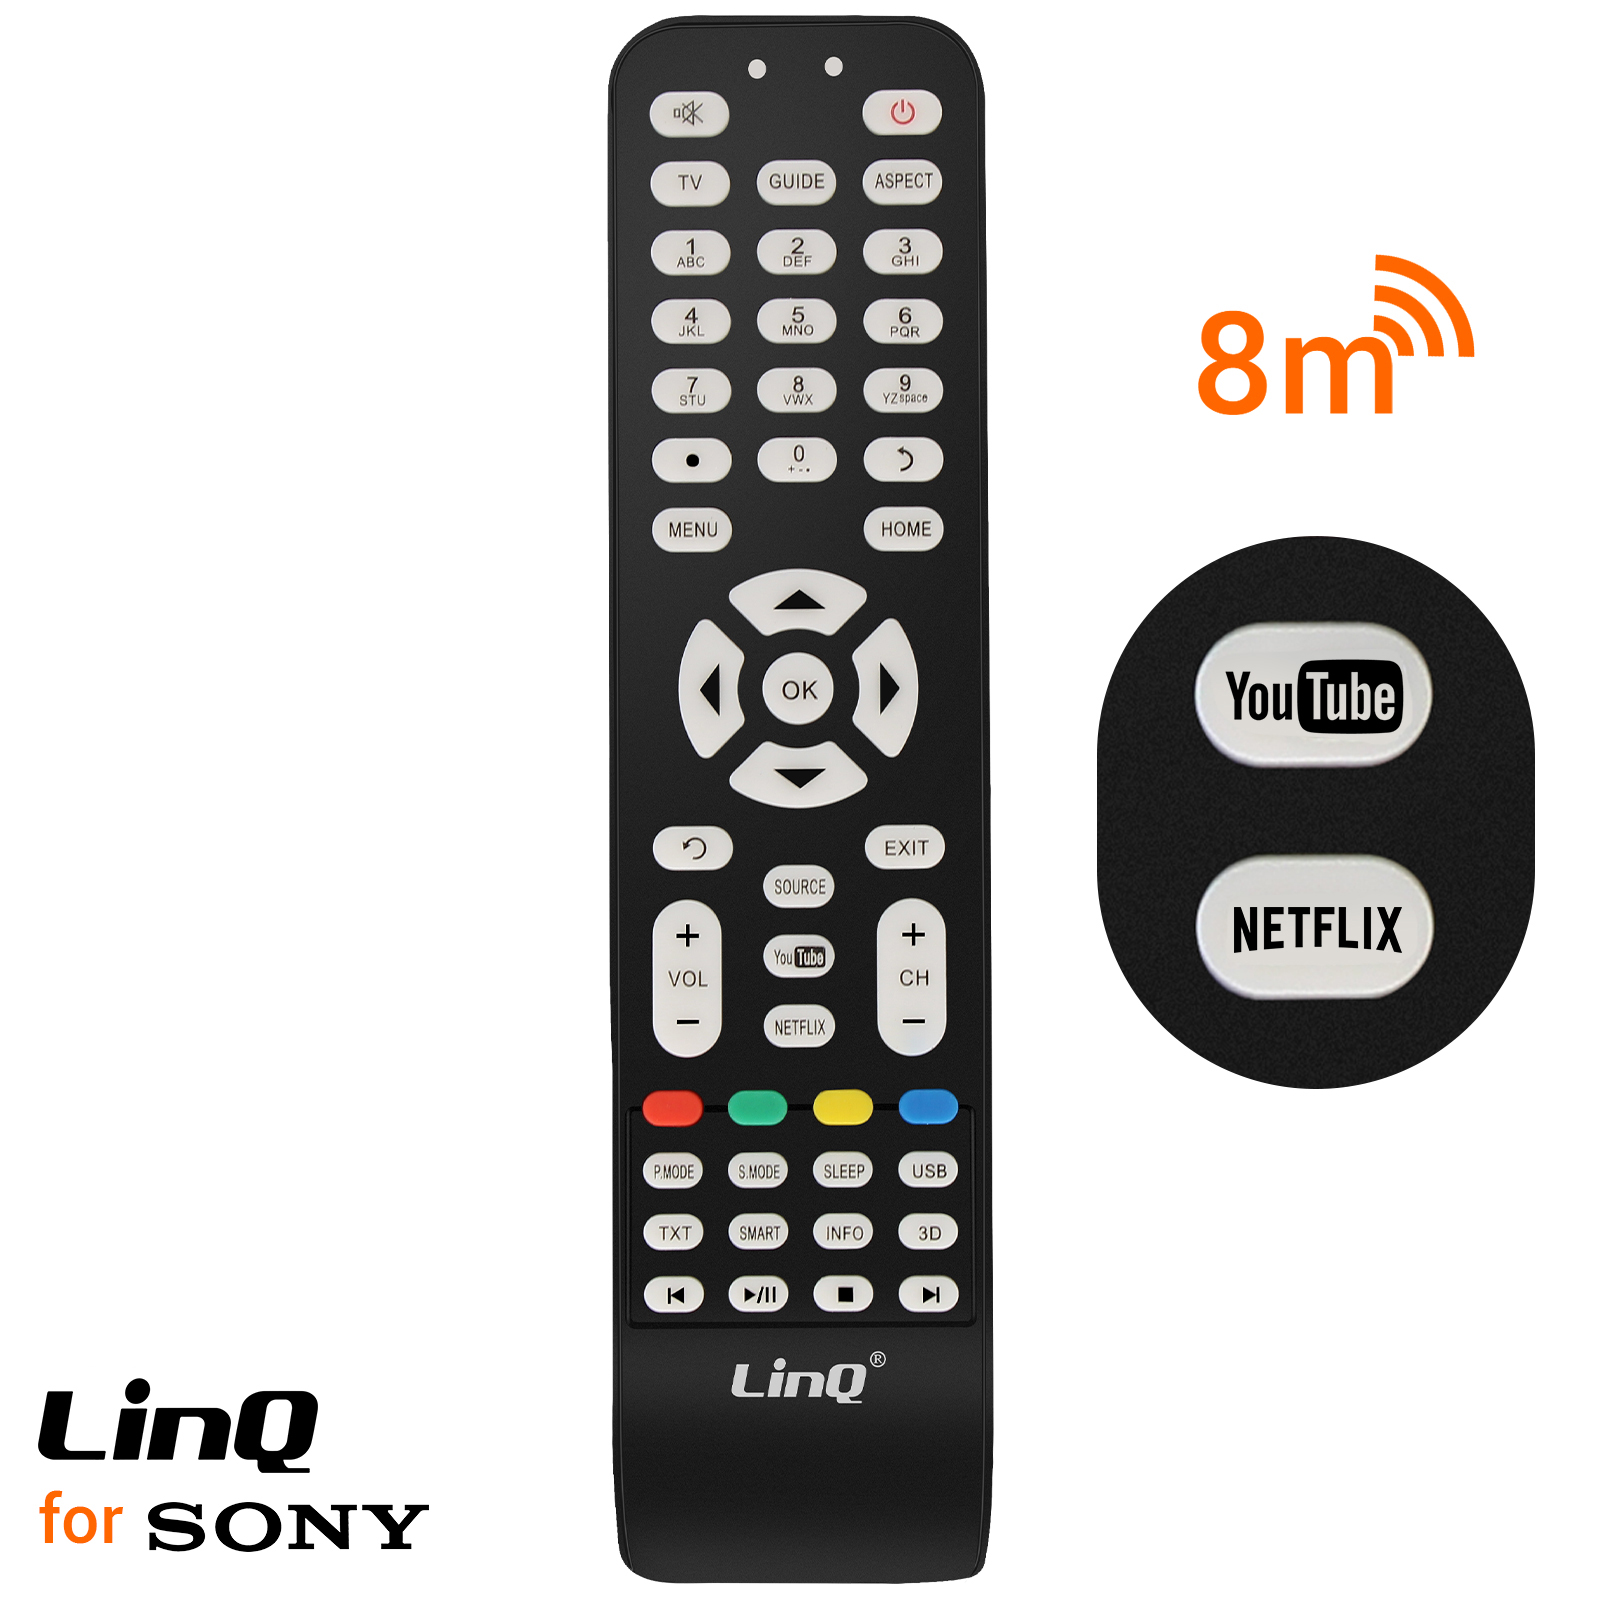 Mando a distancia universal para TV Sony, LinQ - Negro - Spain